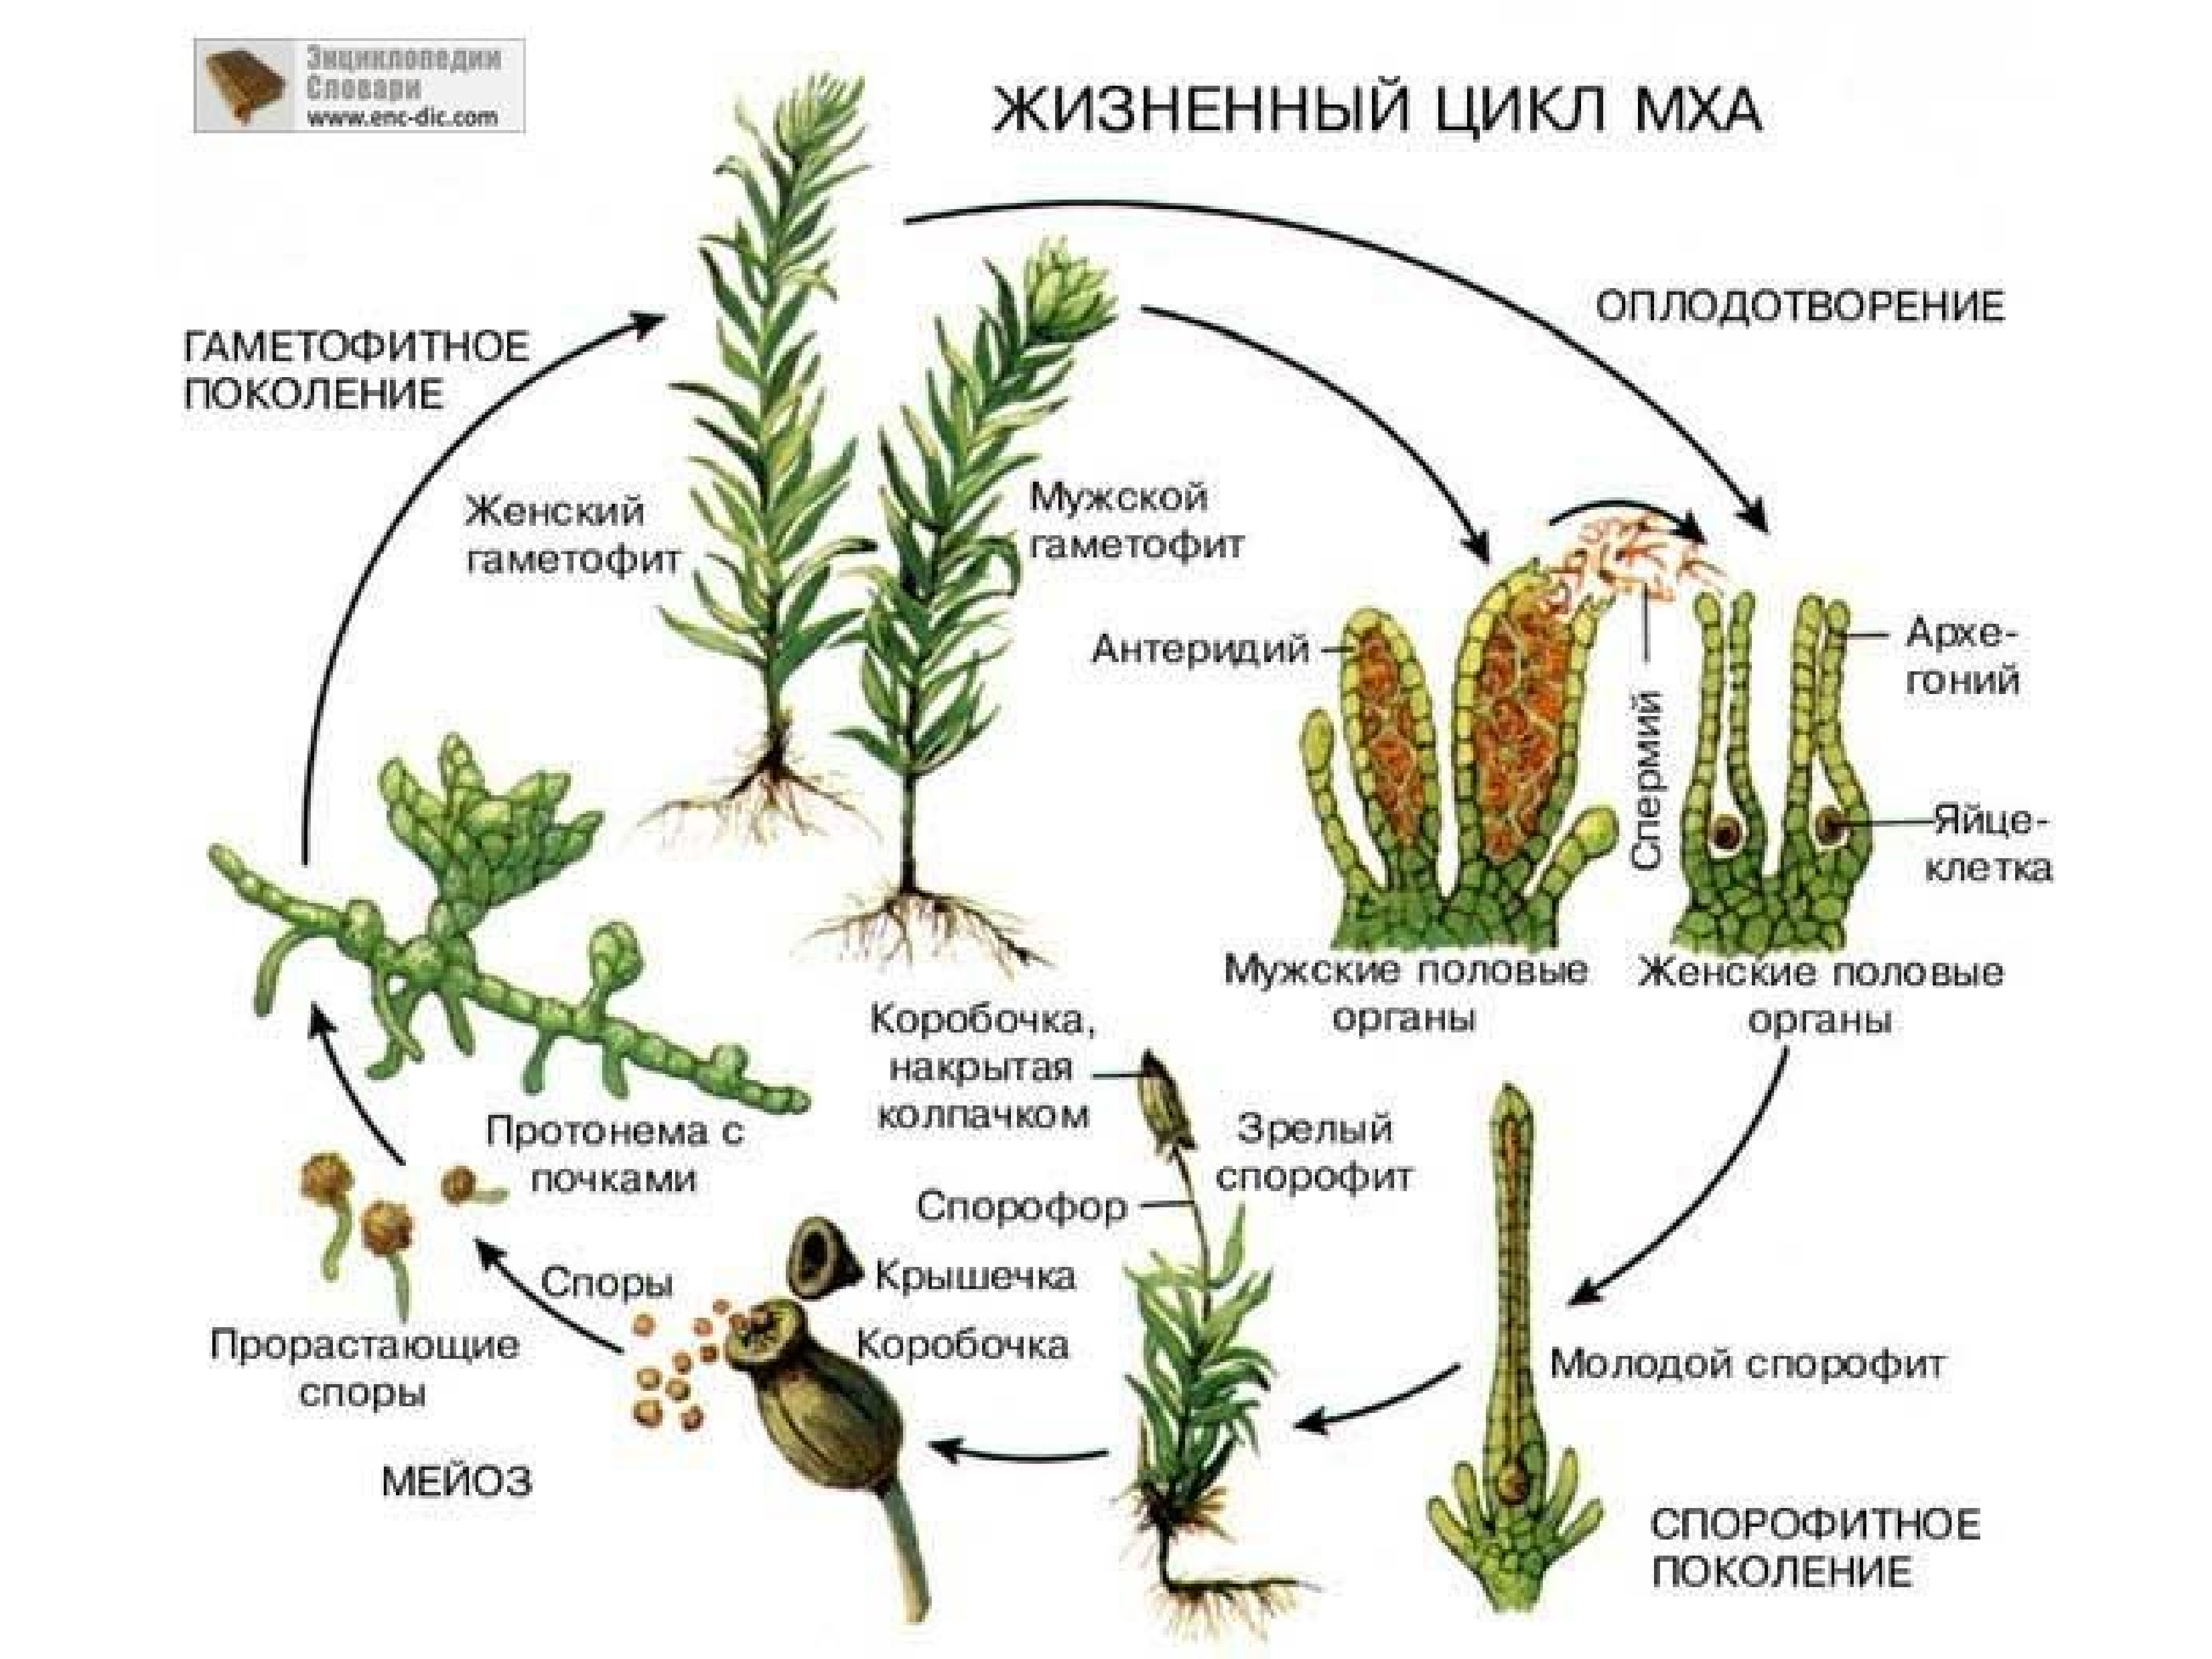 Цветок гаметофит. Жизненный цикл моховидных растений схема. Жизненный цикл мха сфагнума схема. Жизненный цикл мохообразных схема. Жизненный цикл мхов схема.